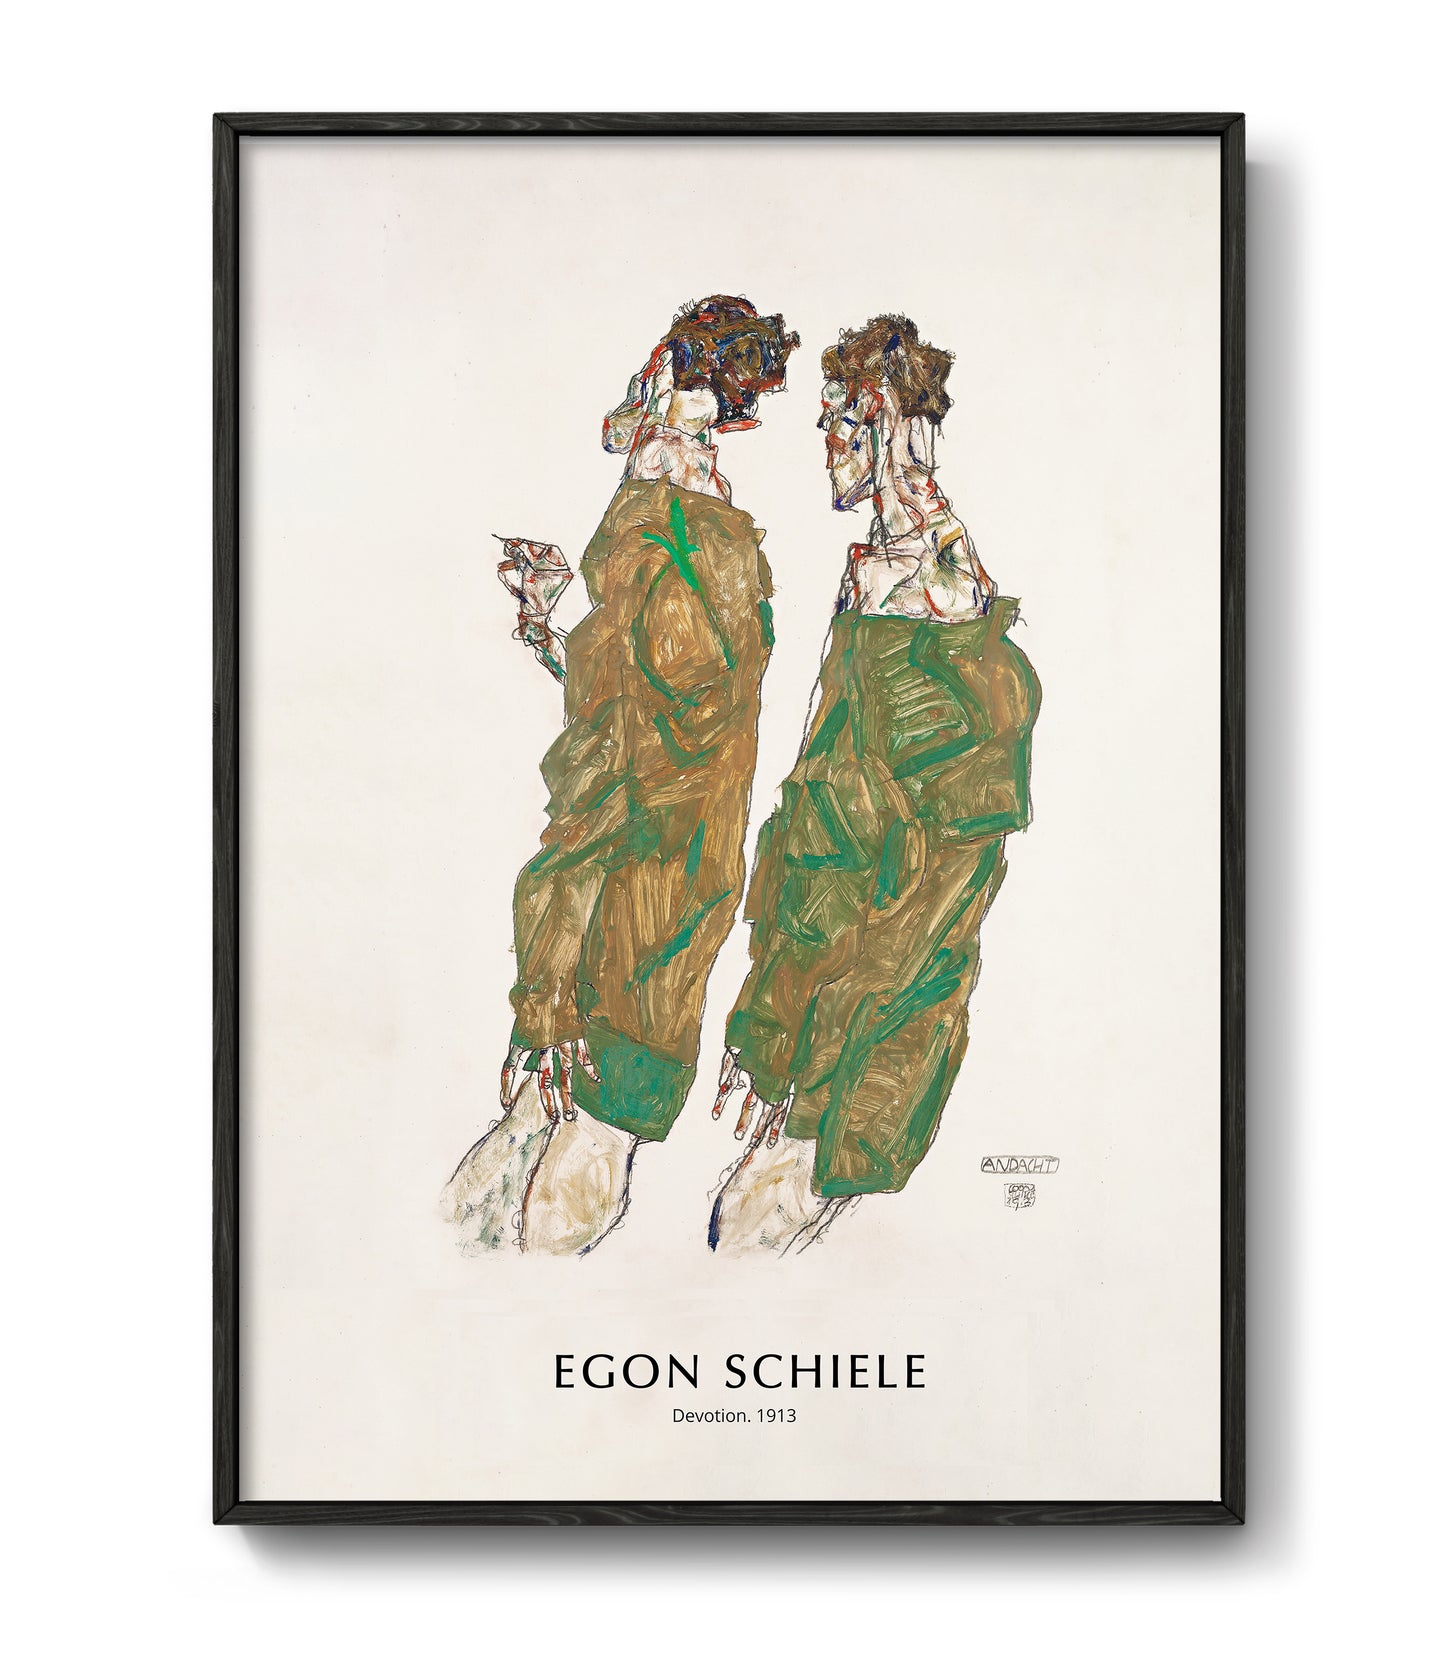 Devotion  by Egon Schiele, 1913